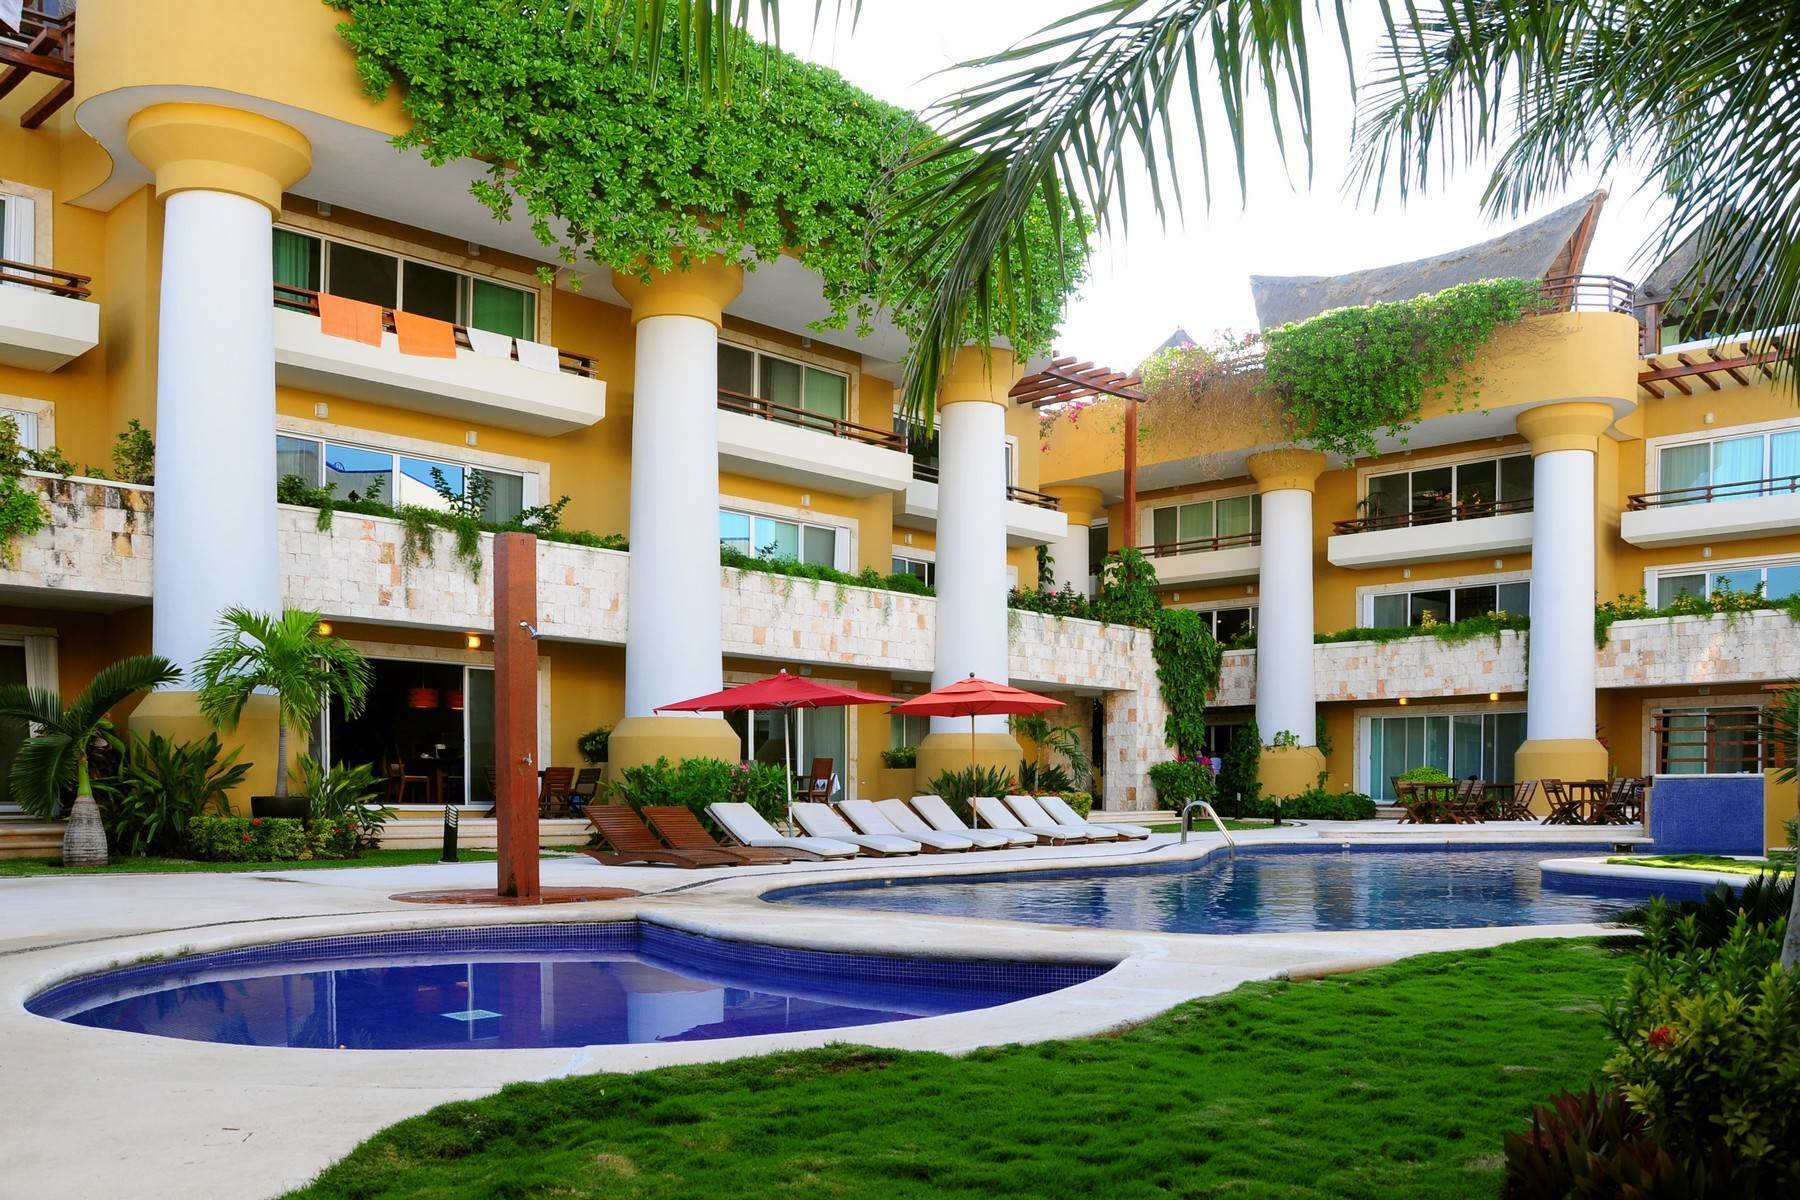 Property for Sale at HIDDEN GEM IN THE MOST BEAUTIFUL STREET IN PLAYA PUEBLITO ESCONDIDO 102, CALLE 38, ENTRE CALLE FLAMINGOS Y CALLE ALBATROS Playa Del Carmen, Quintana Roo 77710 Mexico